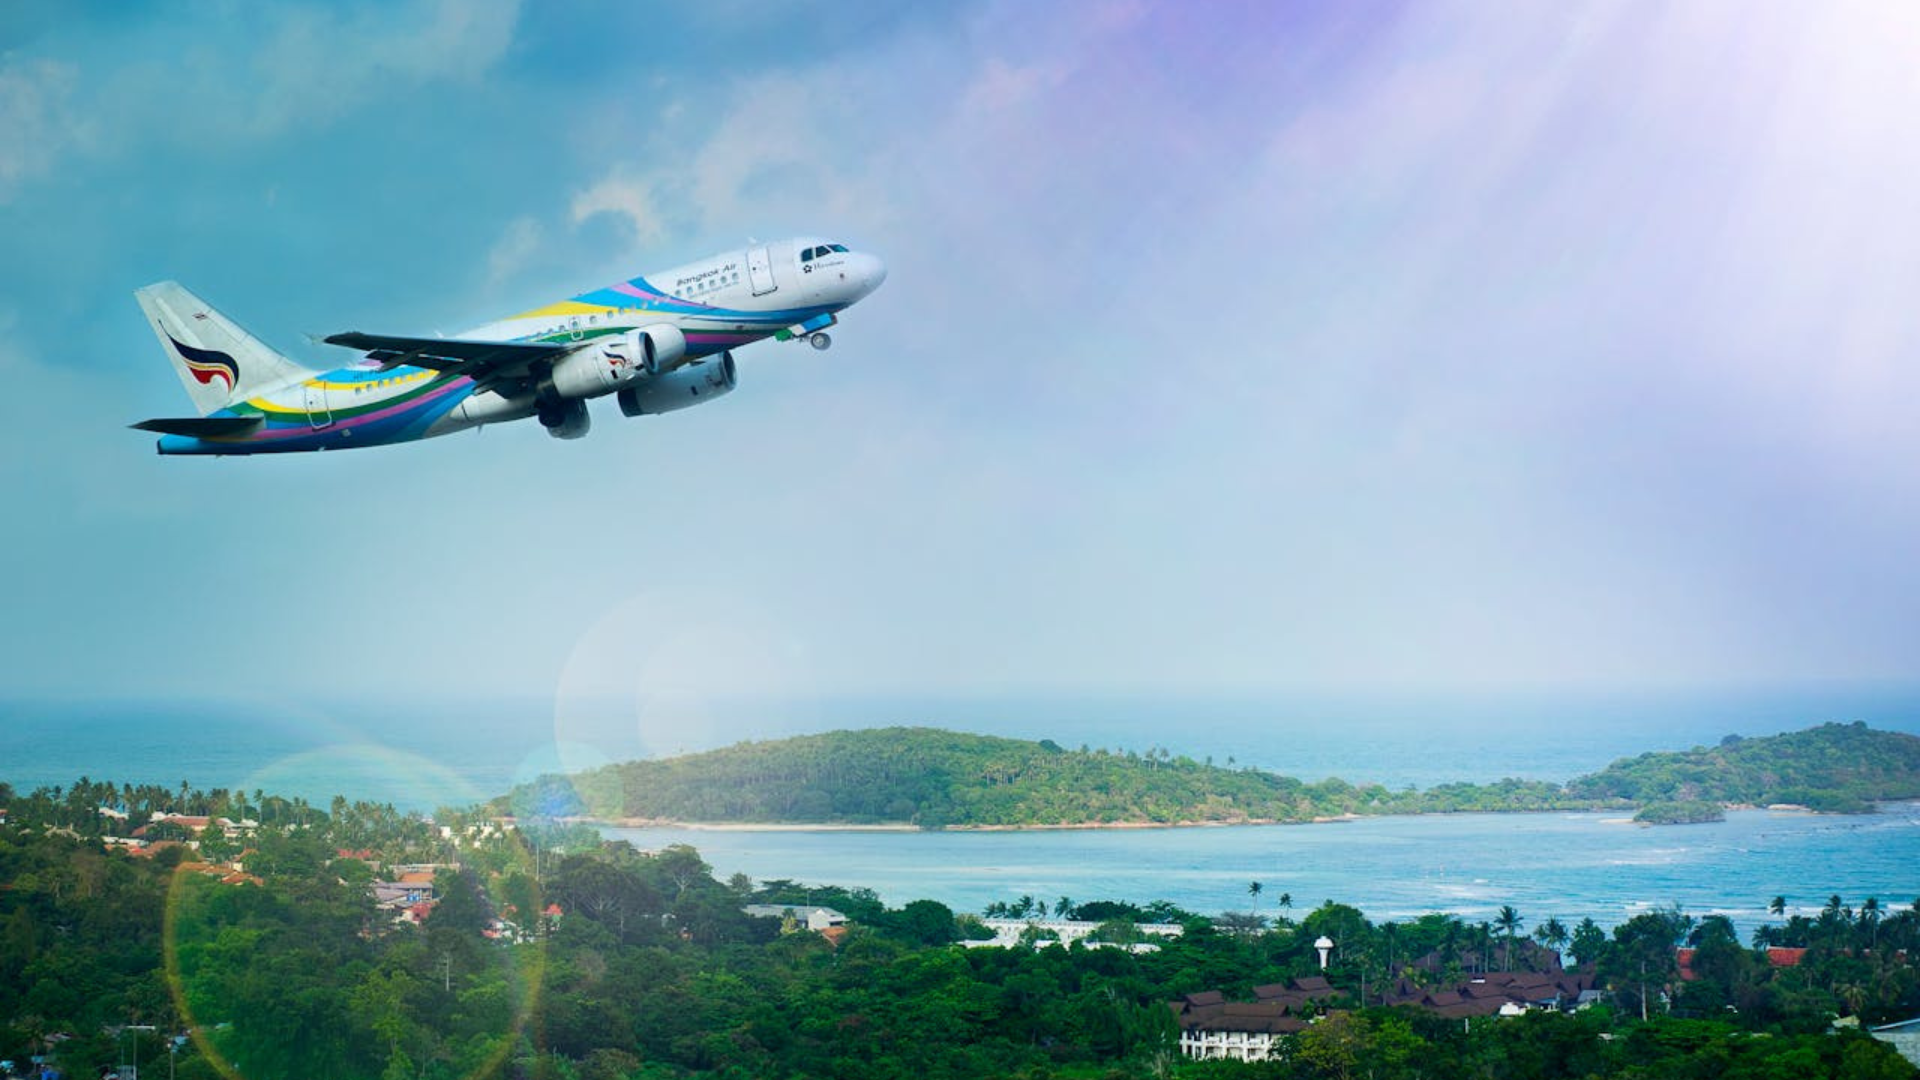 An aeroplane flying against a blue sky backdrop